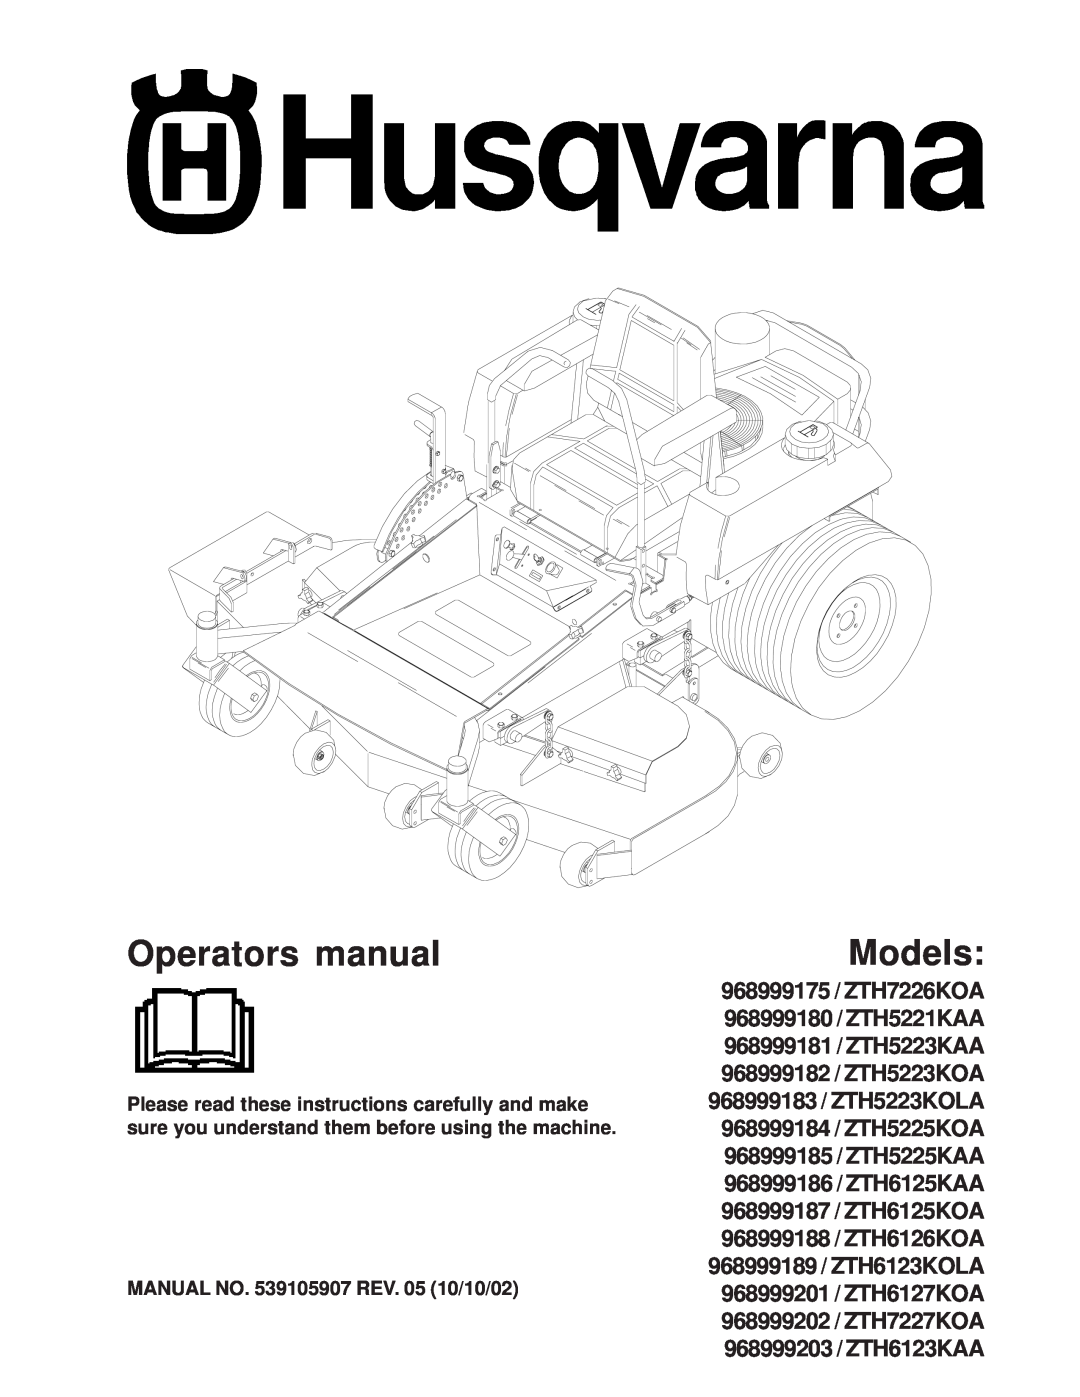 Husqvarna 968999175 / ZTH7226KOA, 968999180/ZTH5221KAA, 968999181/ZTH5223KAA manual Operators manual, Models 